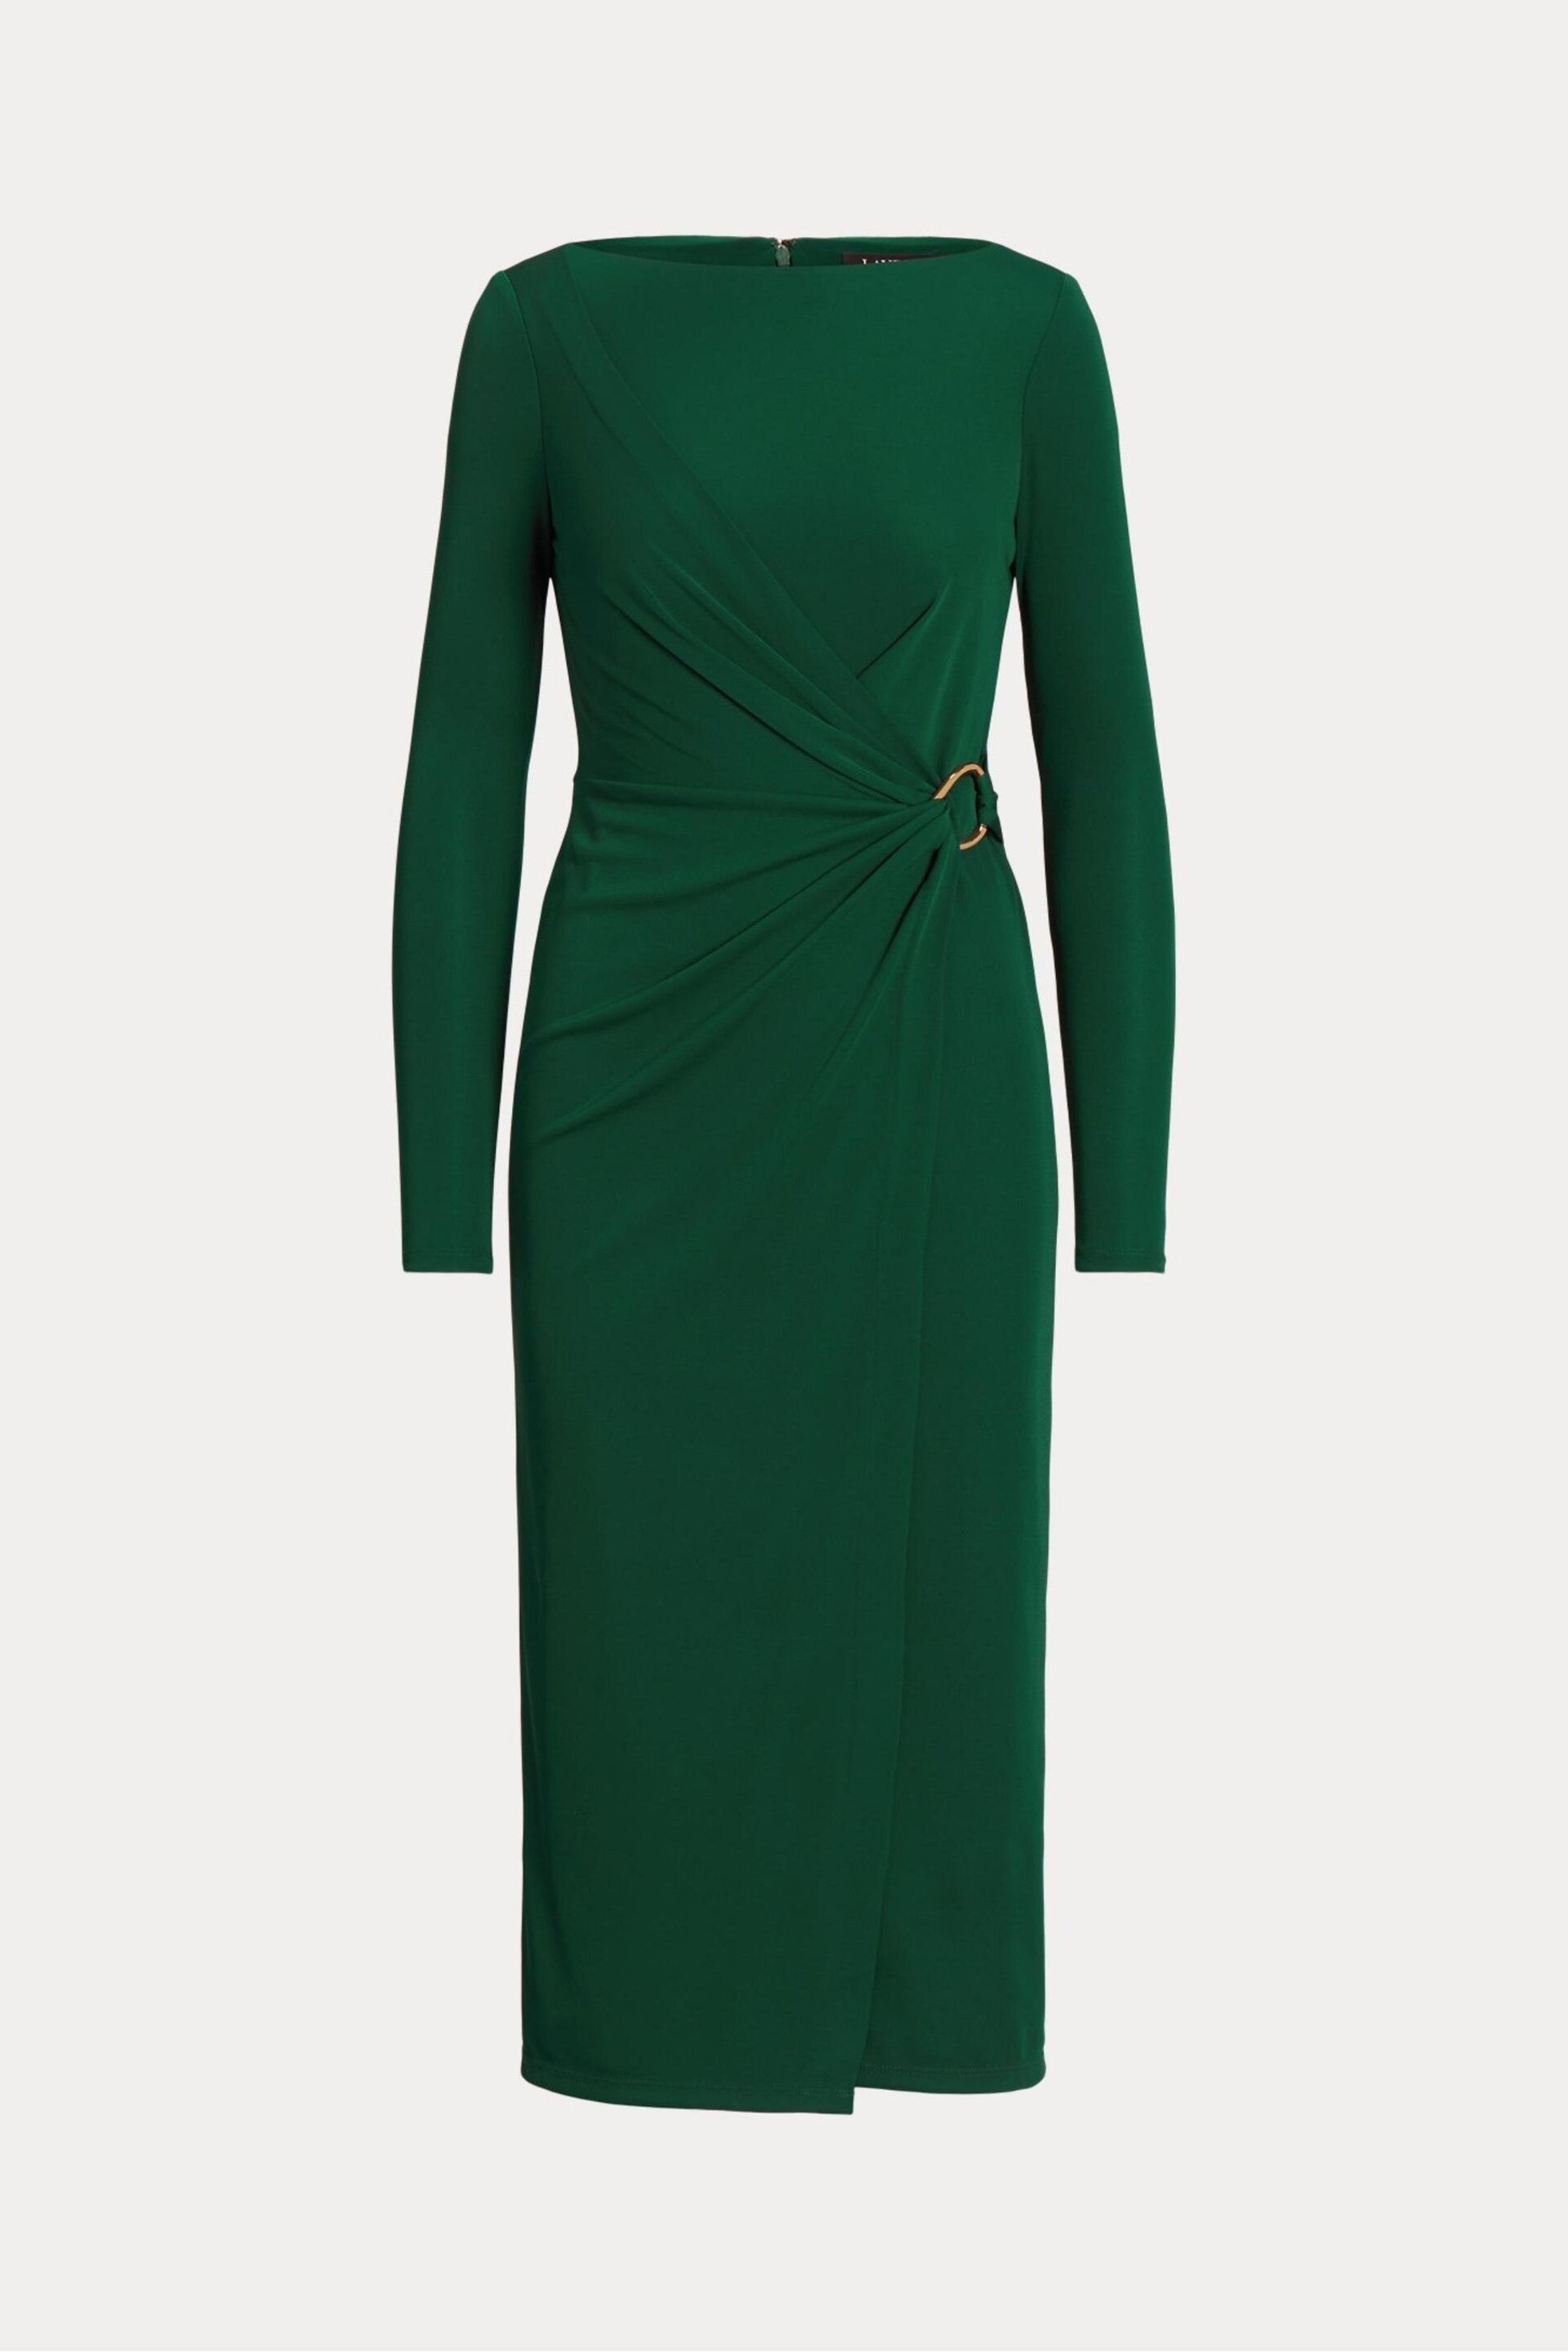 Lauren Ralph Lauren Green Jersey Long Sleeve Cocktail Dress - Image 8 of 8